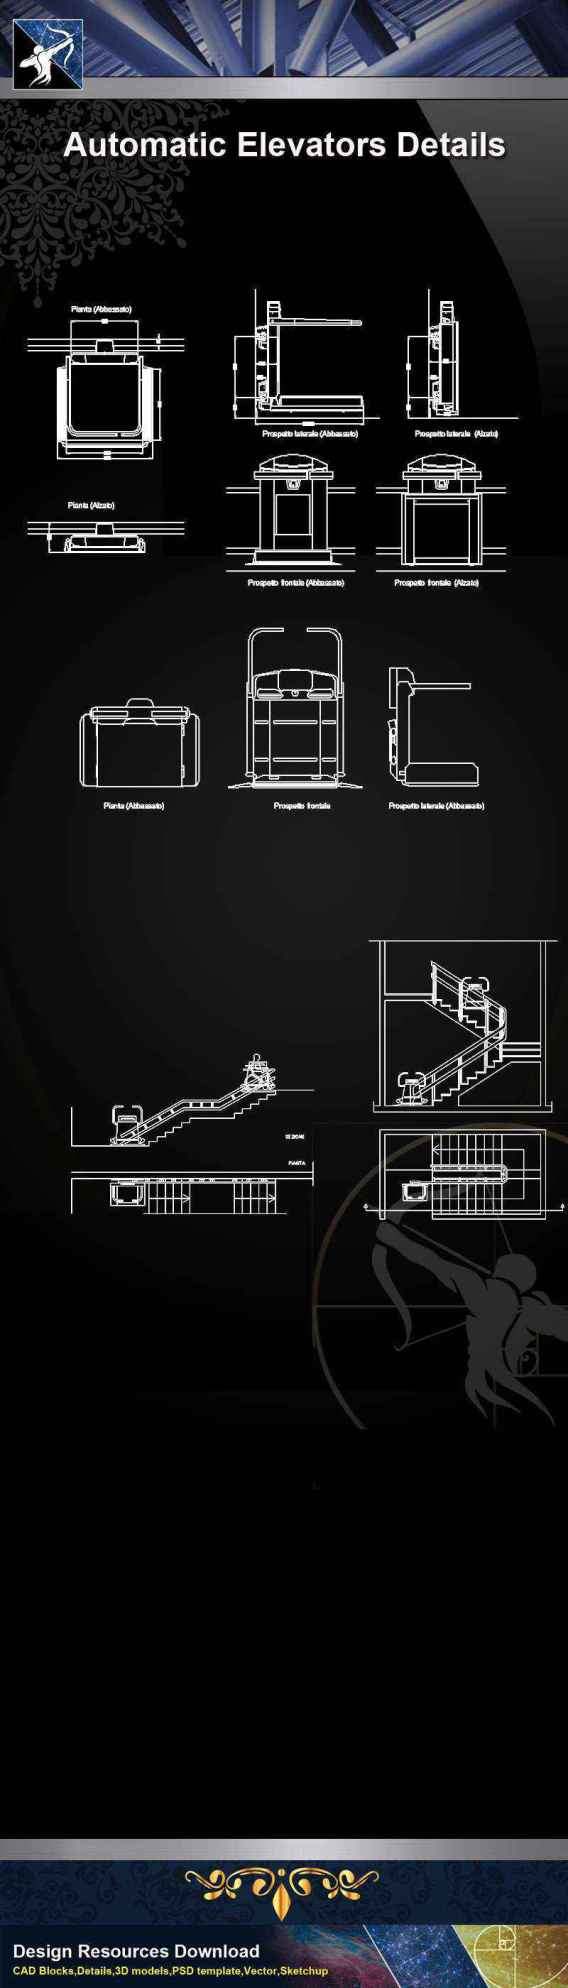 【Architecture CAD Details Collections】Automatic Elevator CAD Details